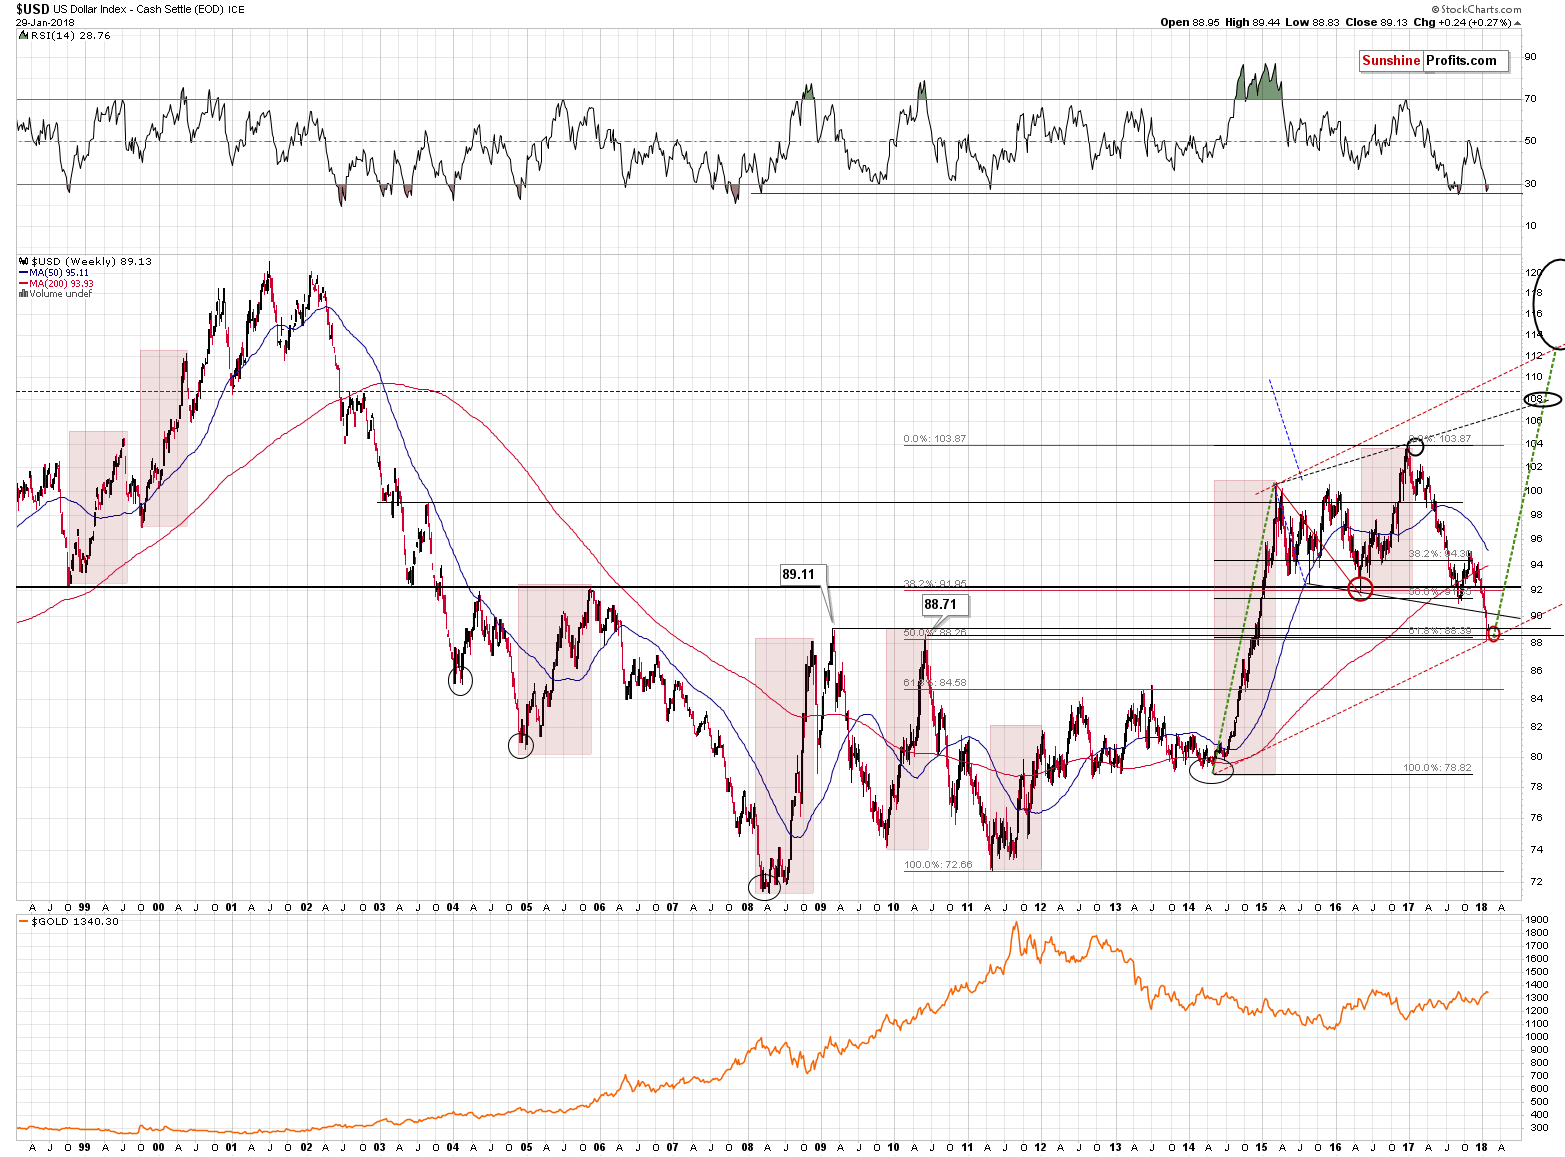 Long-term US Dollar price chart - USD